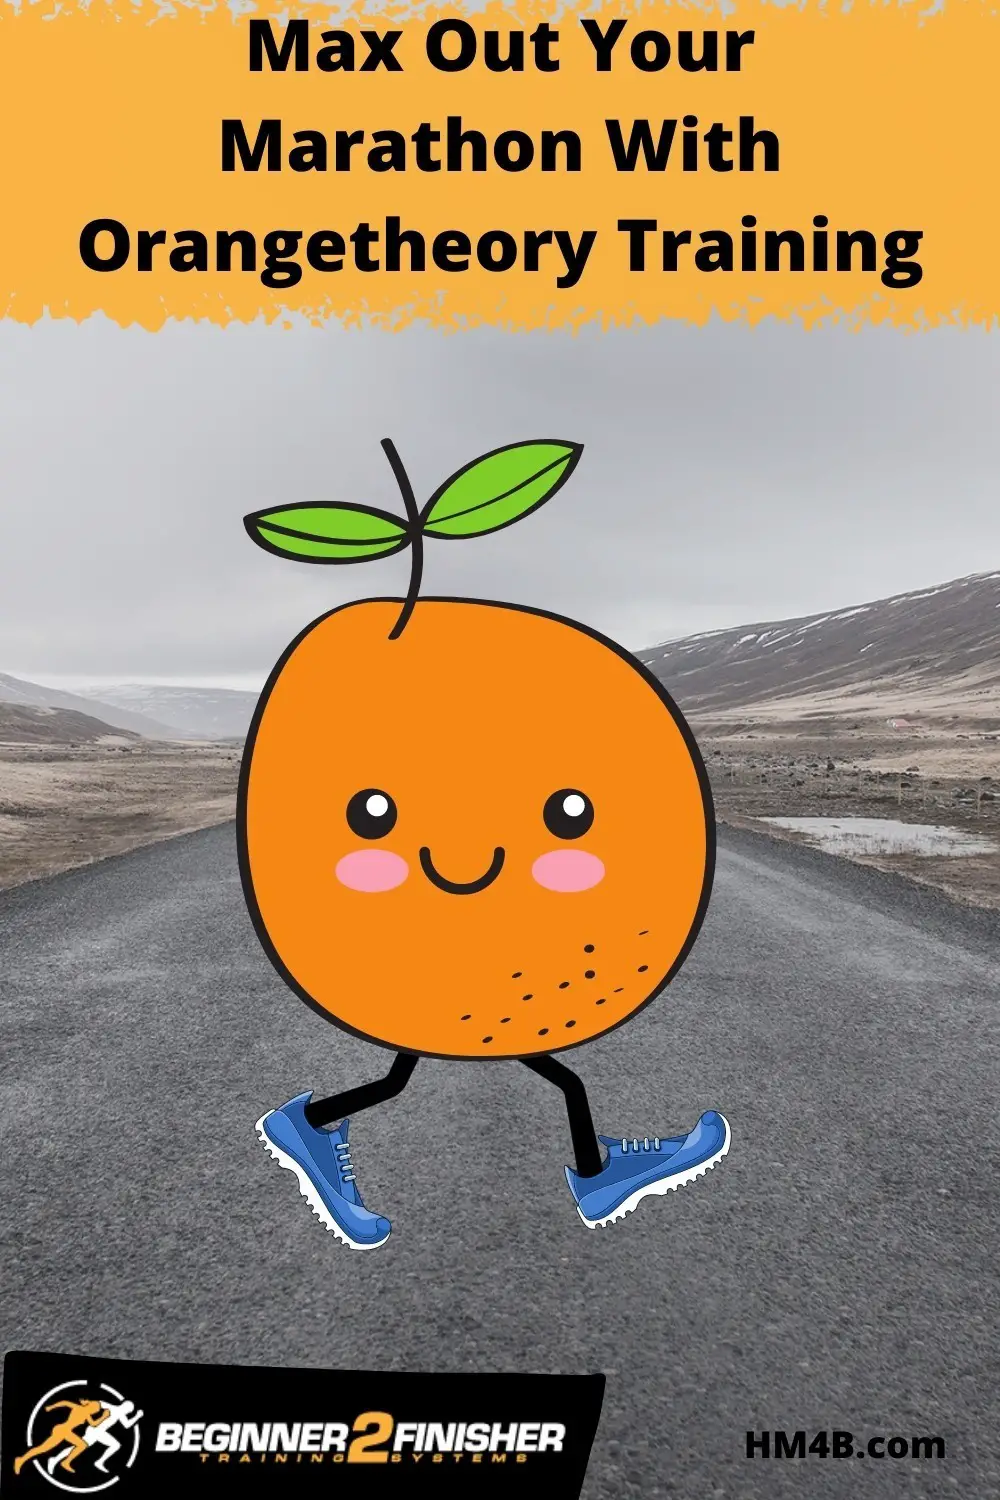 Max Out Your Marathon with OrangeTheory Training